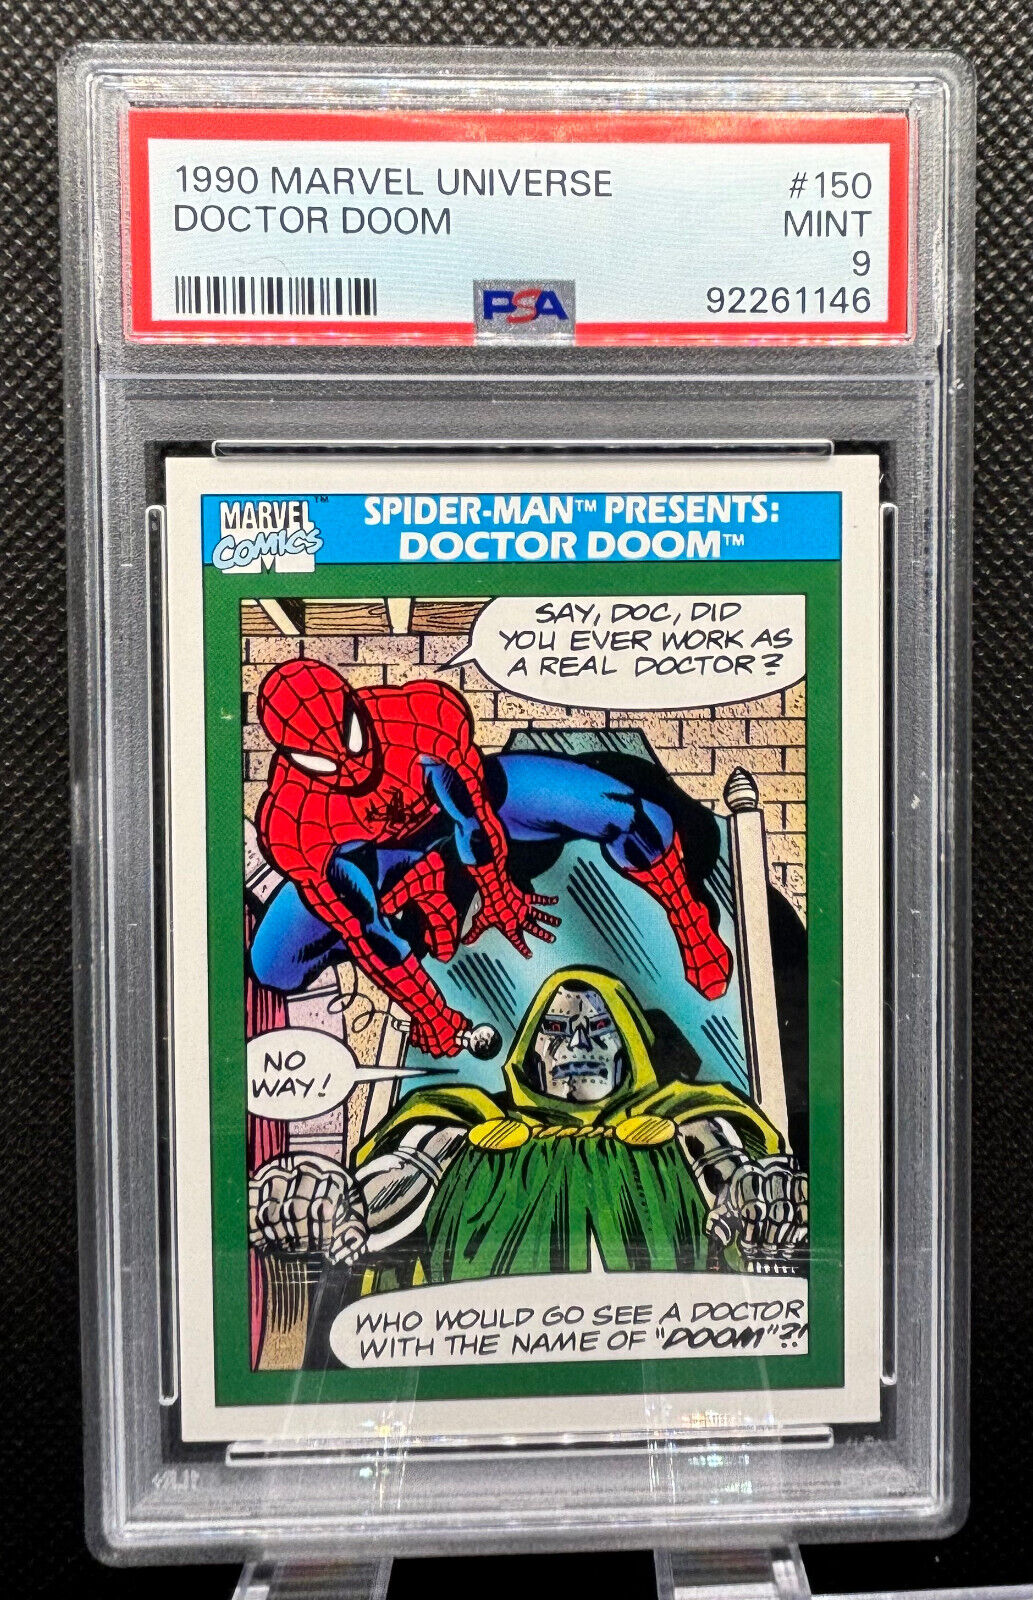 1990 Marvel Universe • #150 Spider-Man Presents: Doctor Doom • PSA 9 MINT • MCU